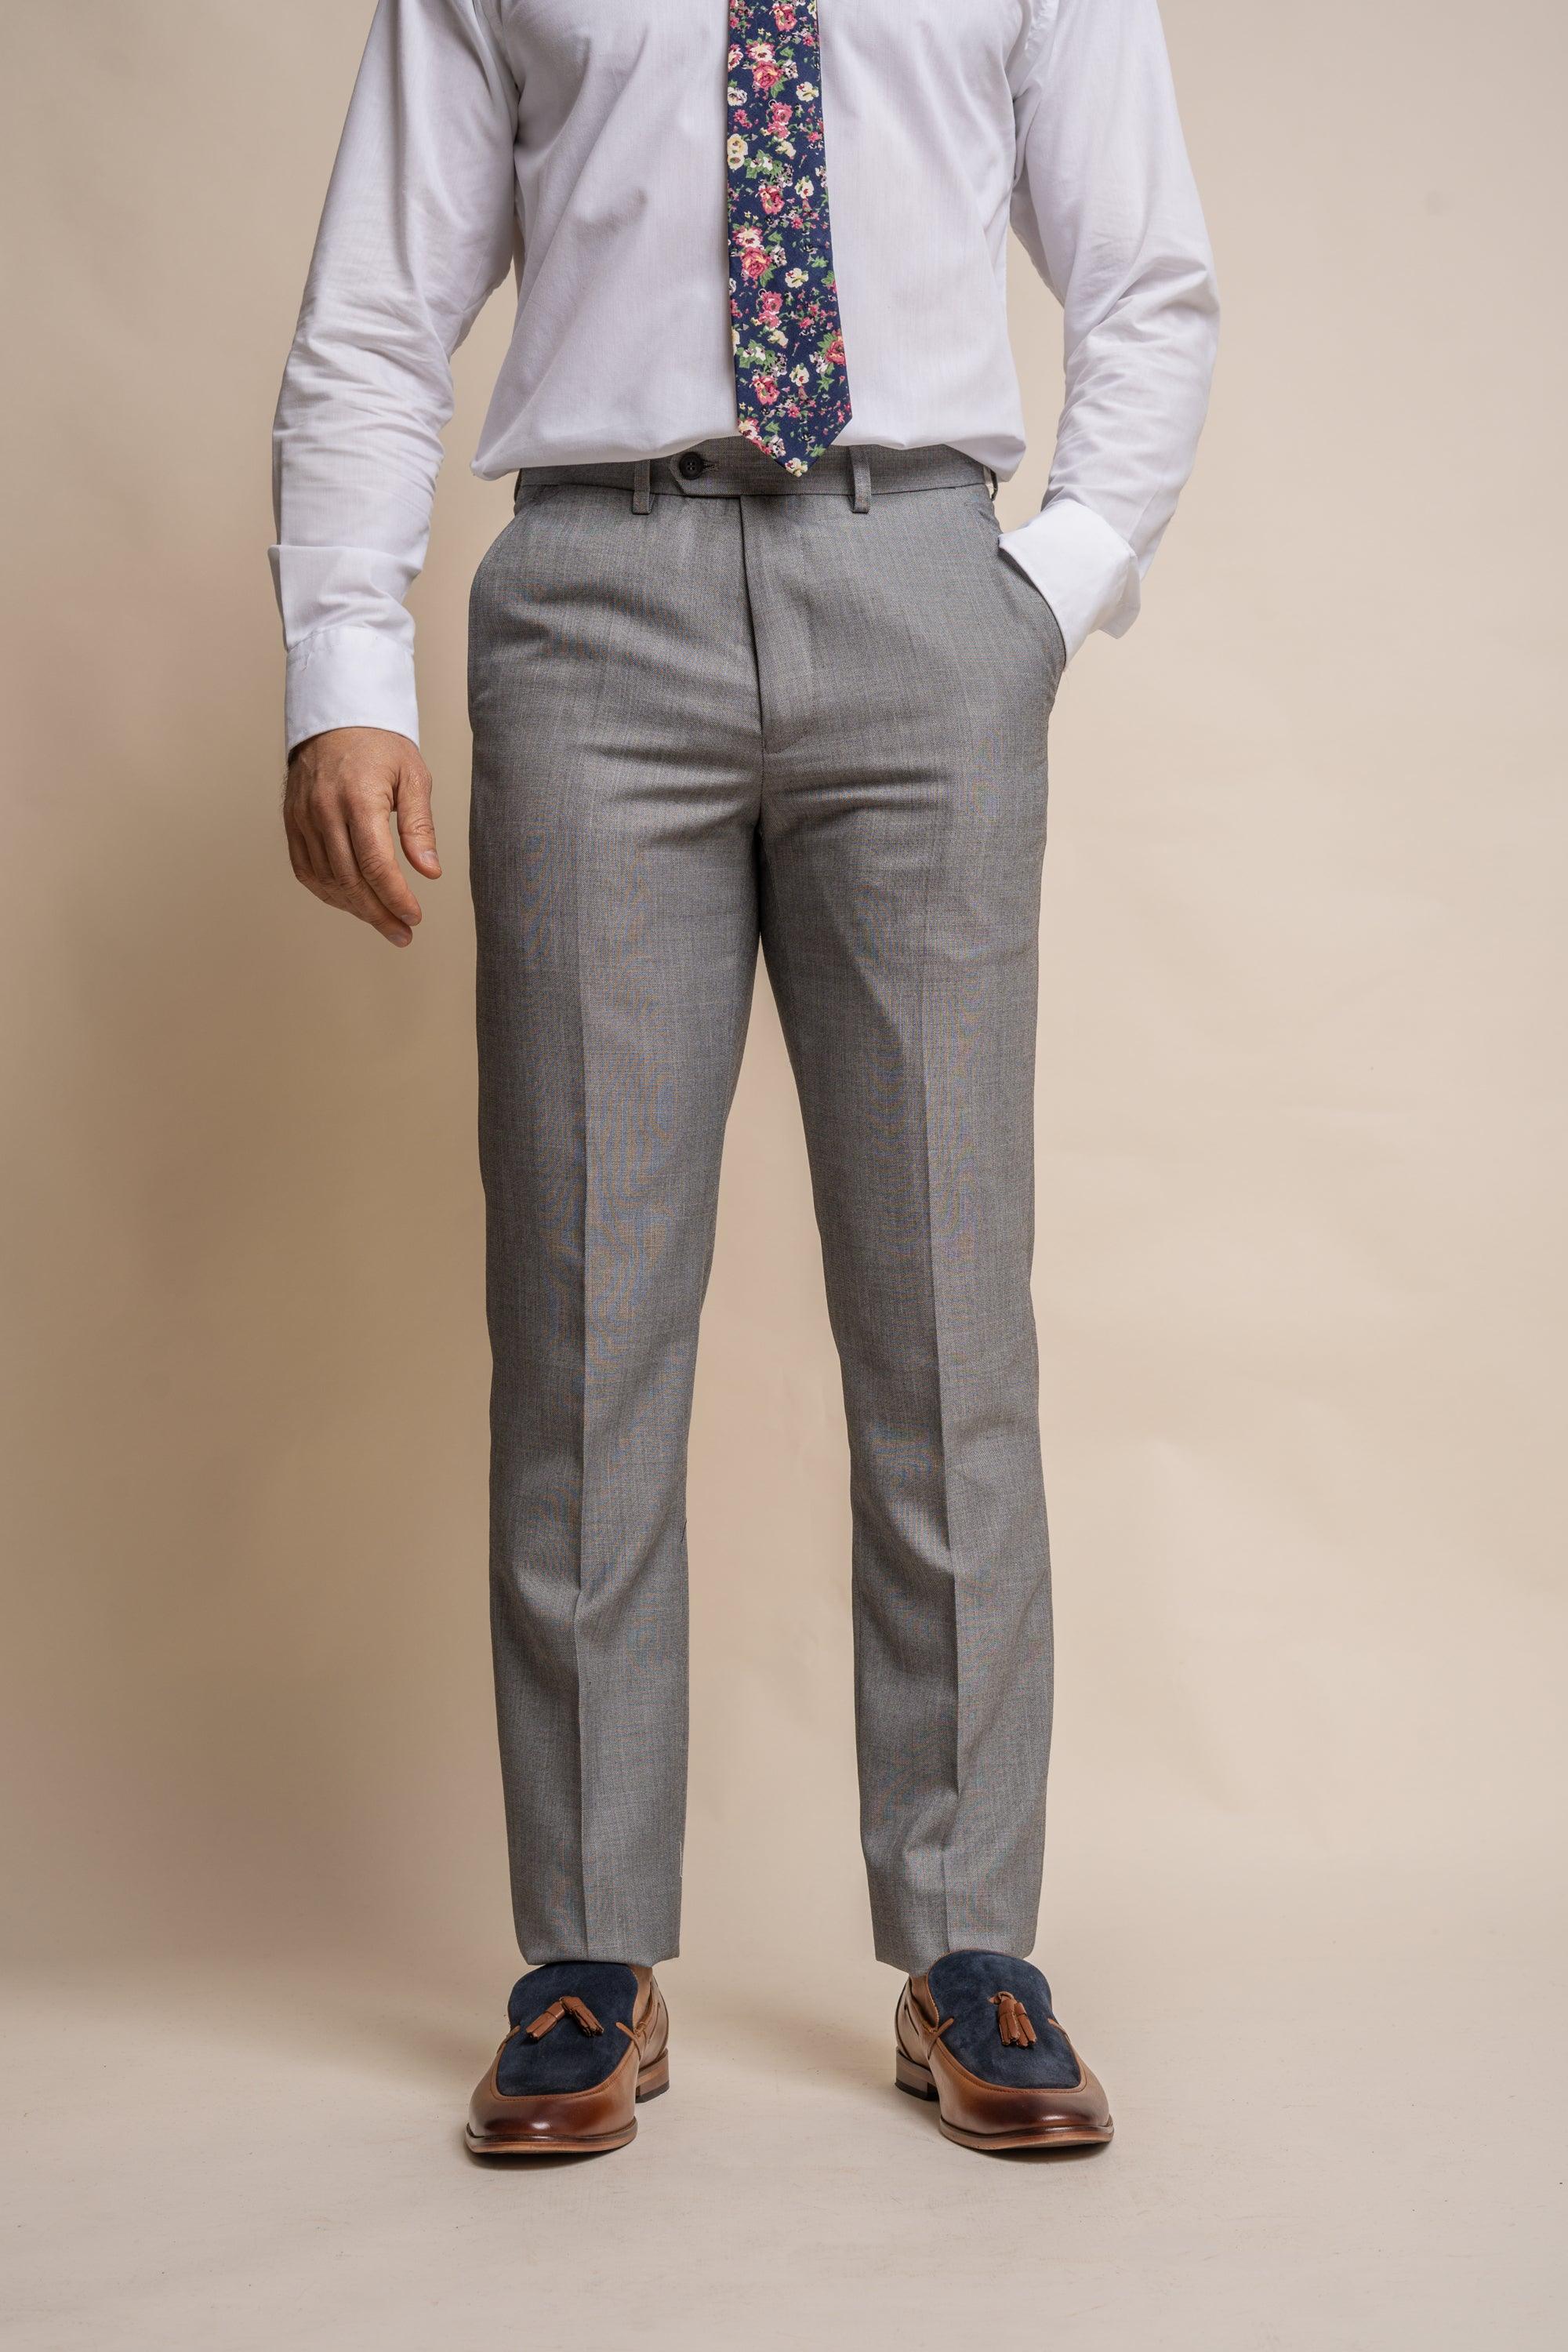 Reegan Grey Slim Fit Regular Three Piece Suit